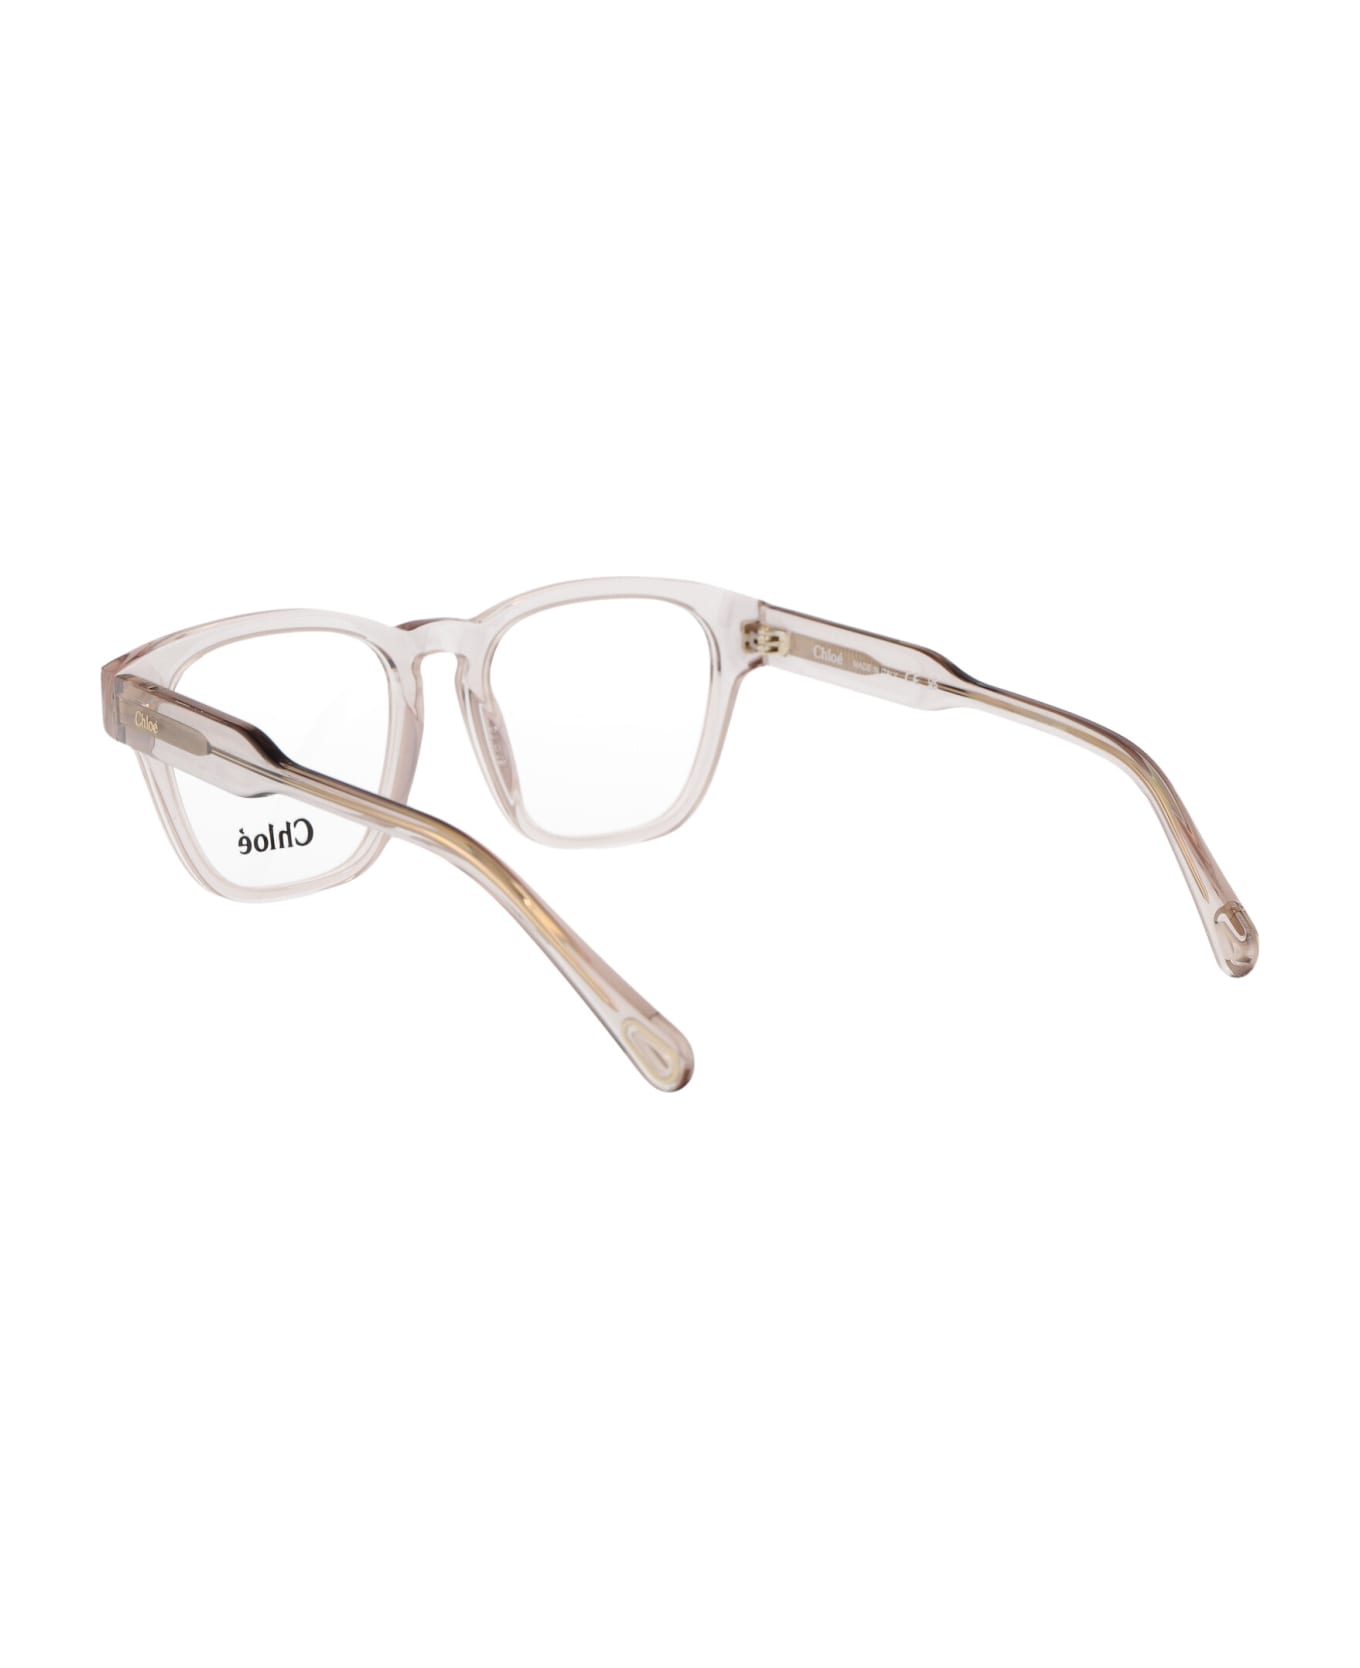 Chloé Eyewear Ch0161o Glasses - 005 NUDE NUDE TRANSPARENT